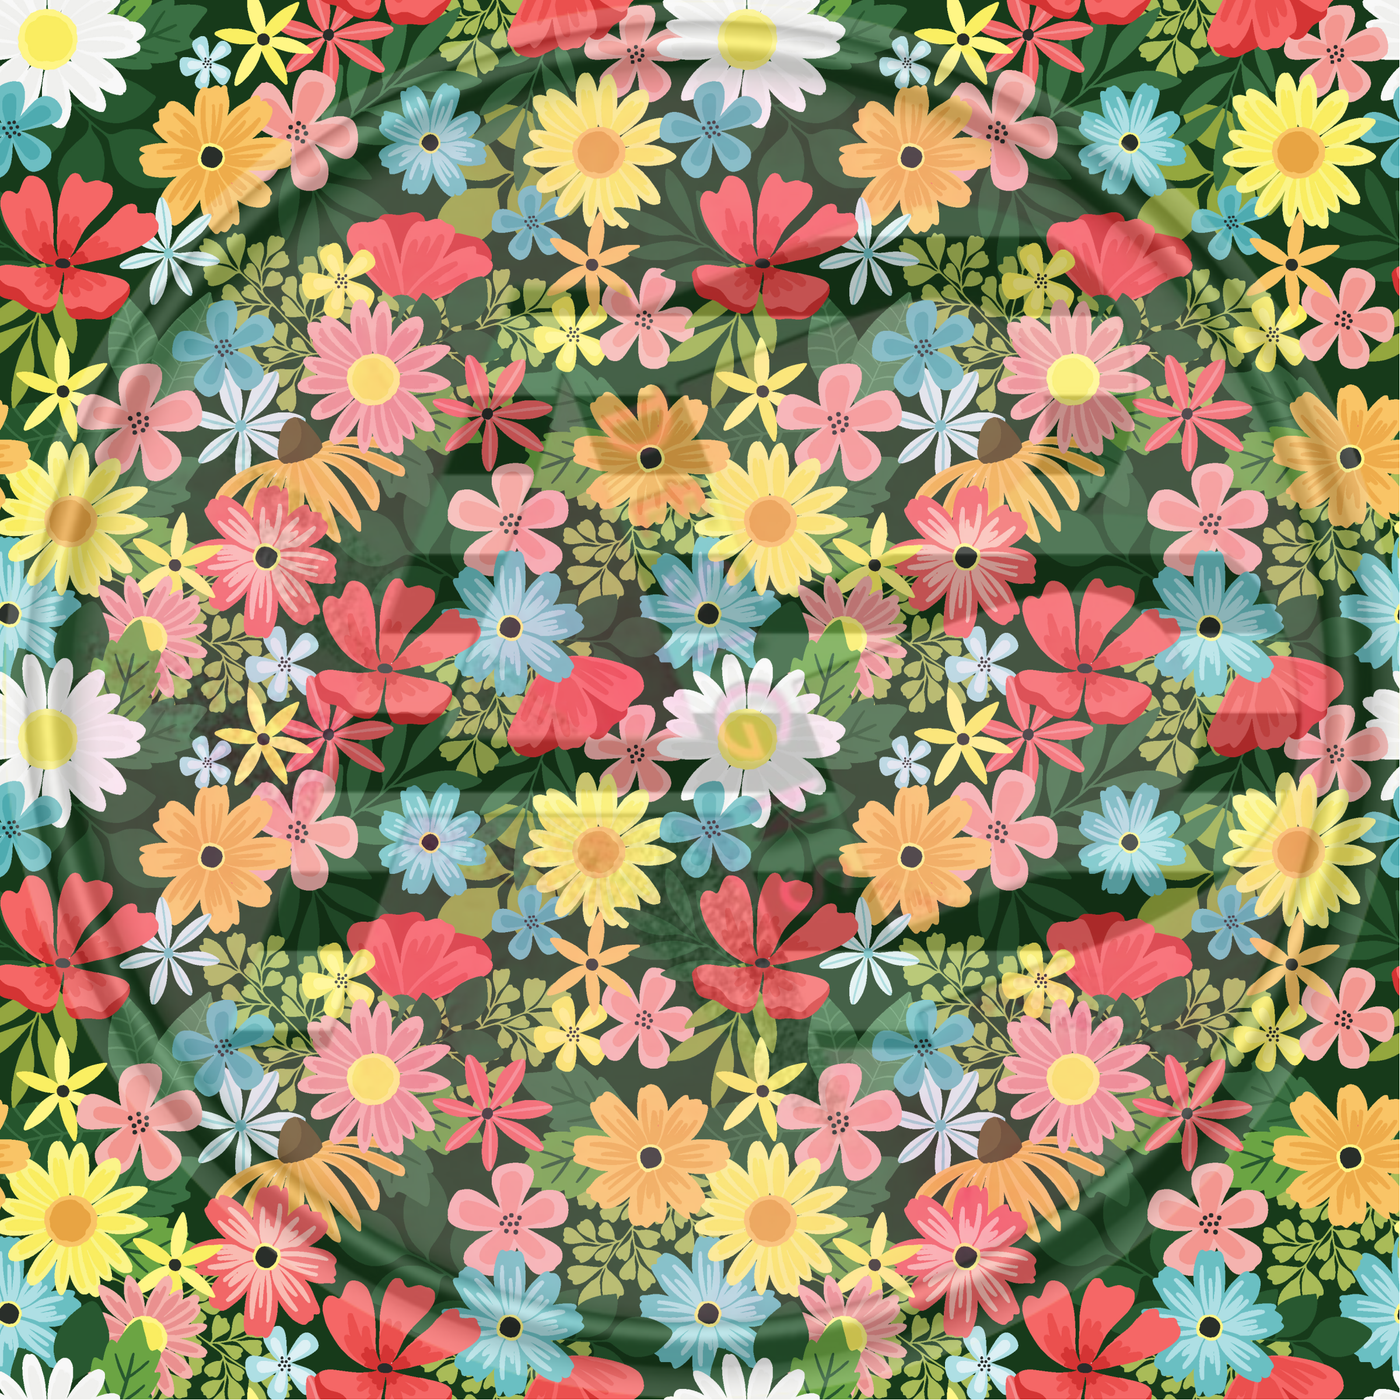 Adhesive Patterned Vinyl - Summer Floral 58